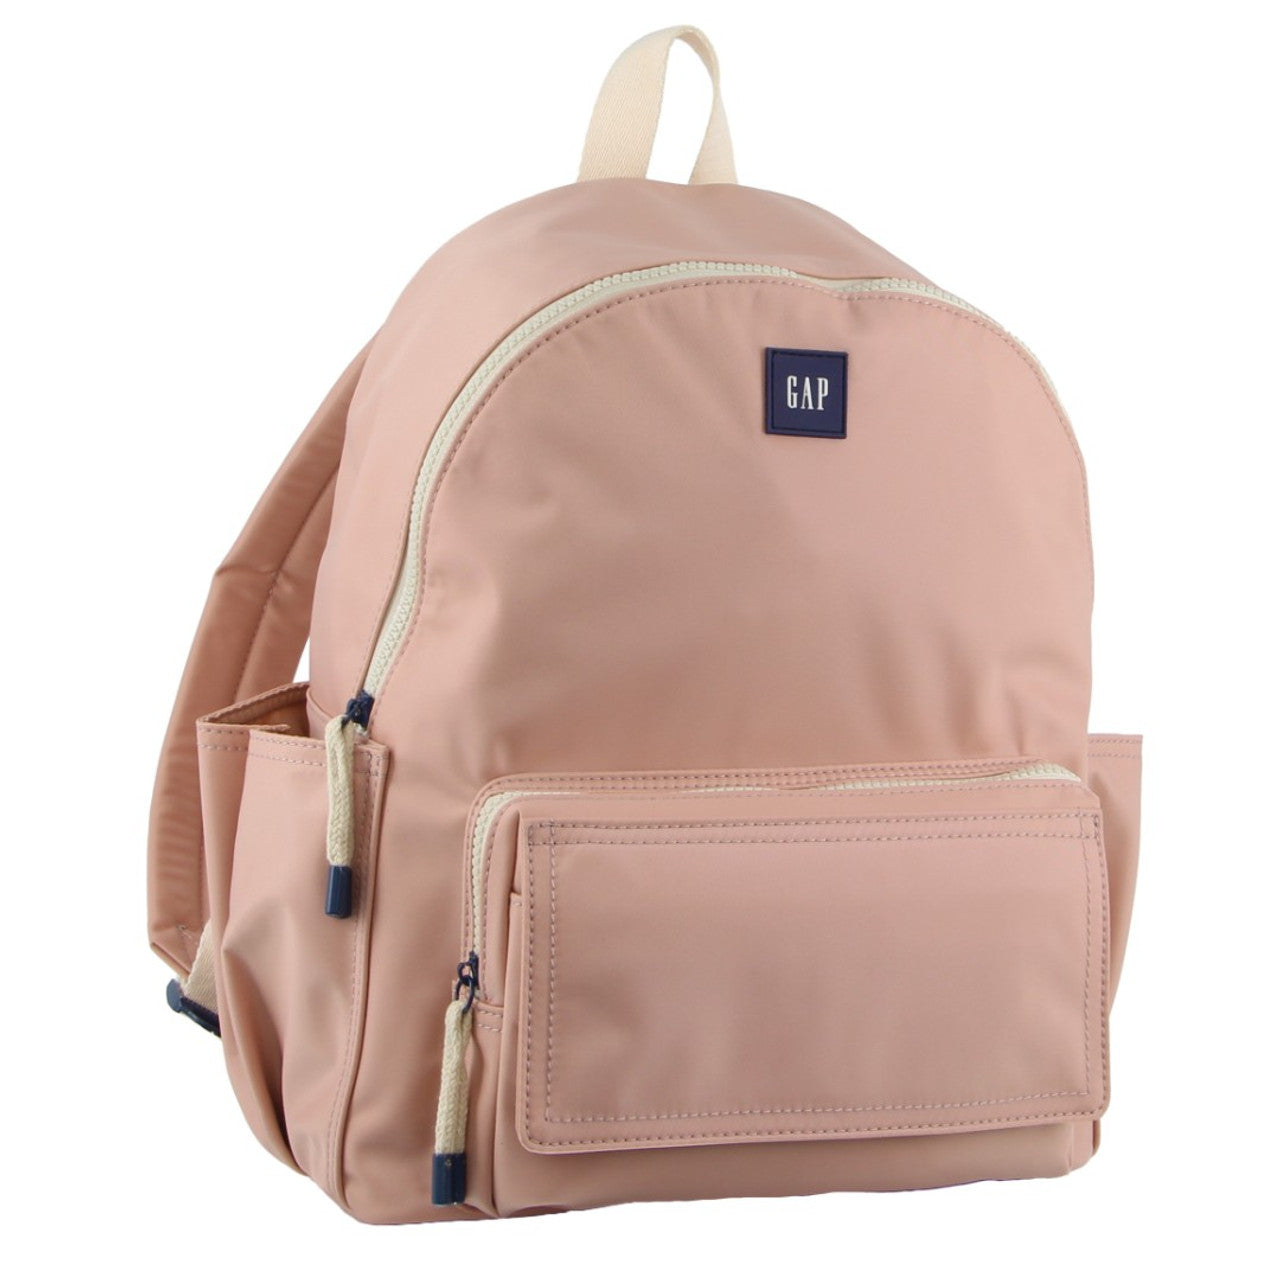 GAP - 11 Nylon Backpack front pocket - Blush